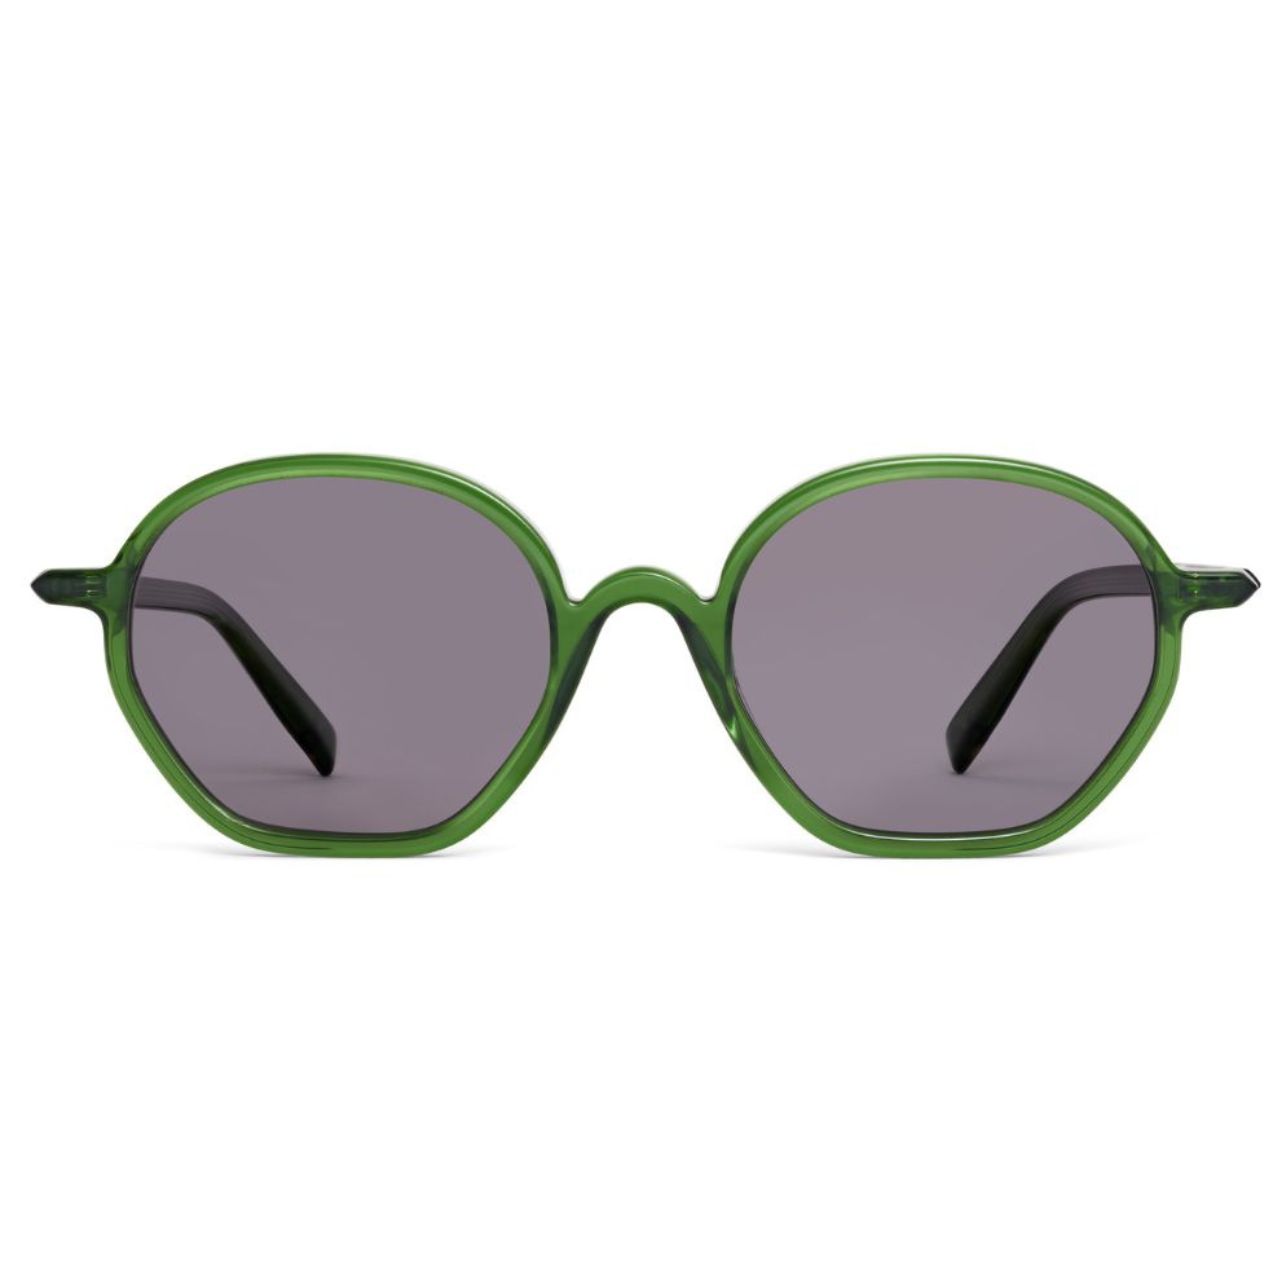 Morgenthal Frederics green acetate sunglasses